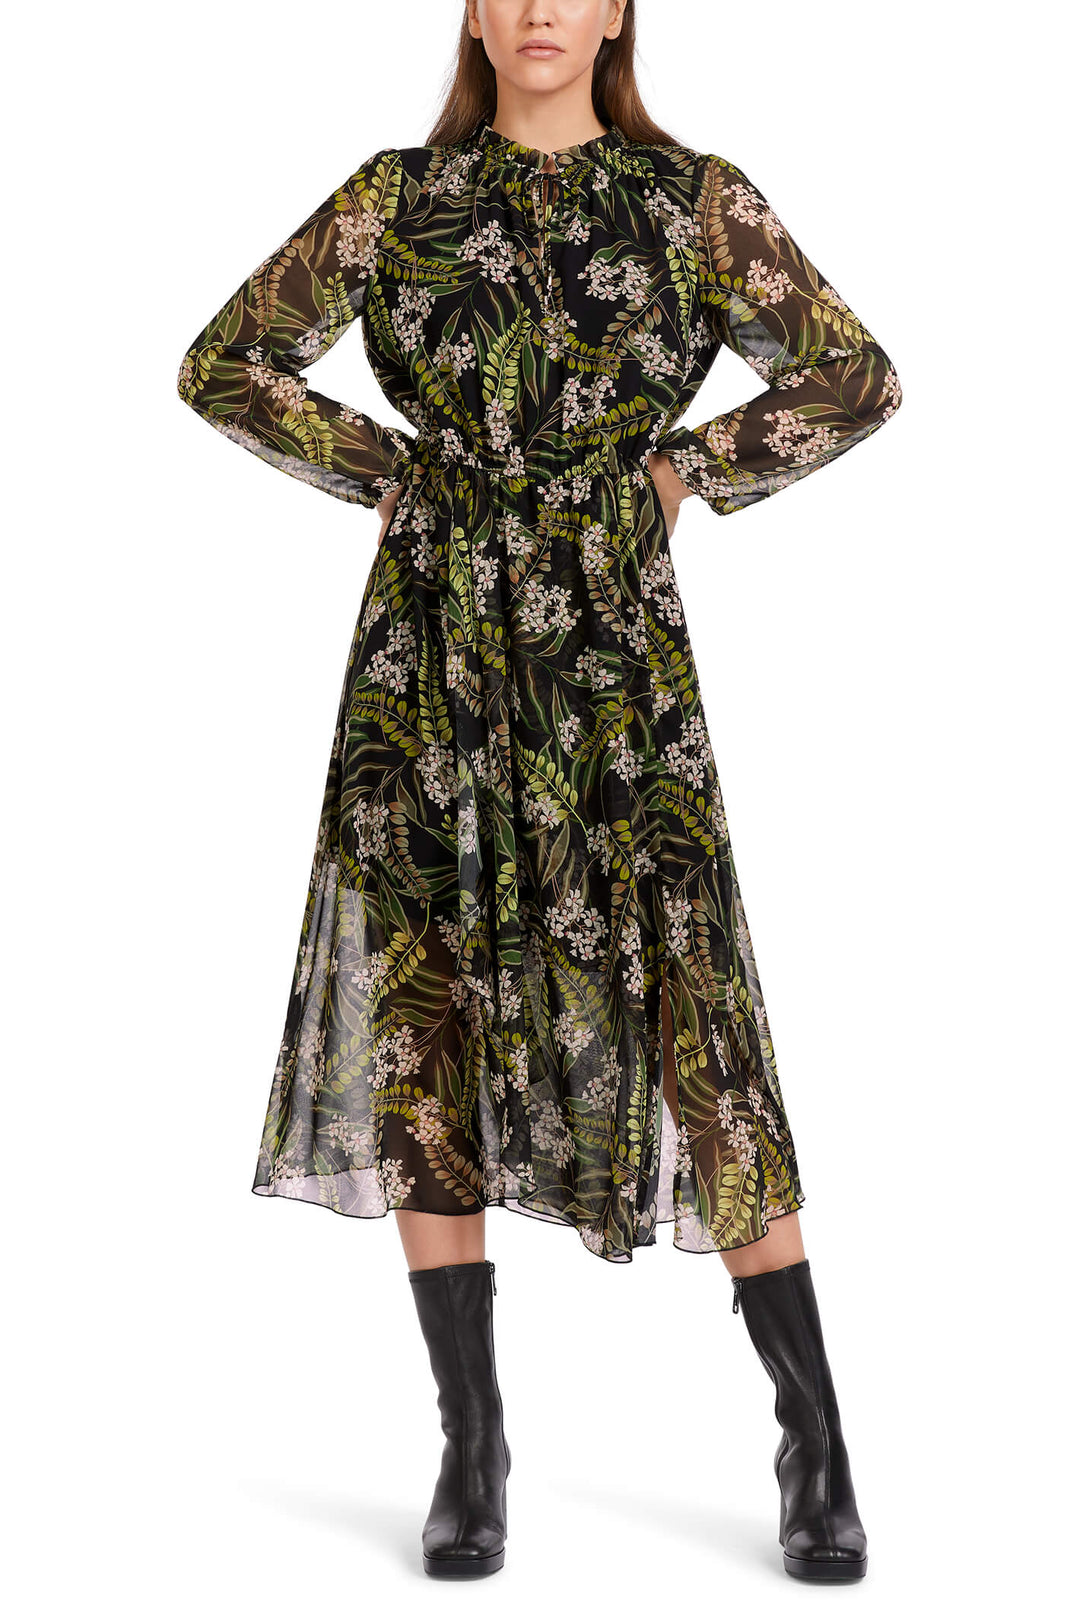 Marc Cain Collections VC 21.49 W87 900 Black Leaf Print Floaty Dress - Olivia Grace Fashion